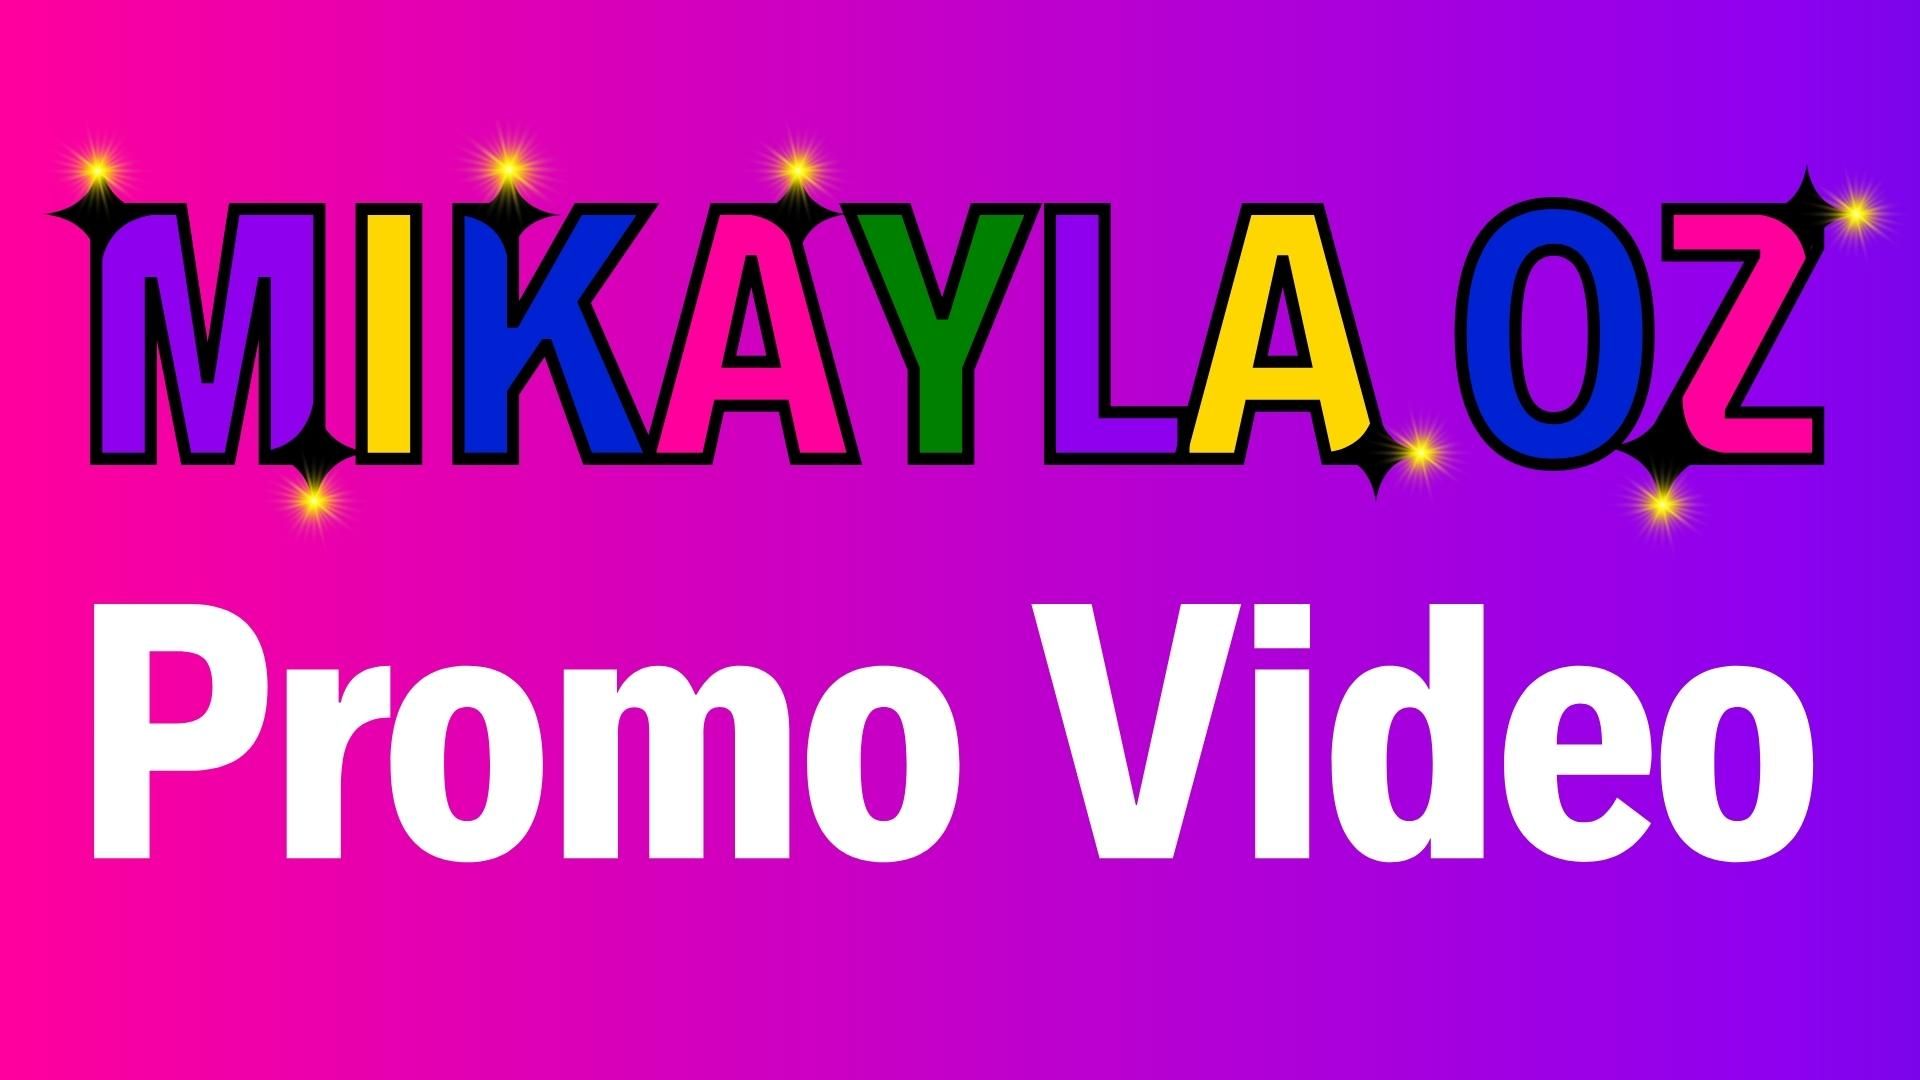 Mikayla Oz Promo Video